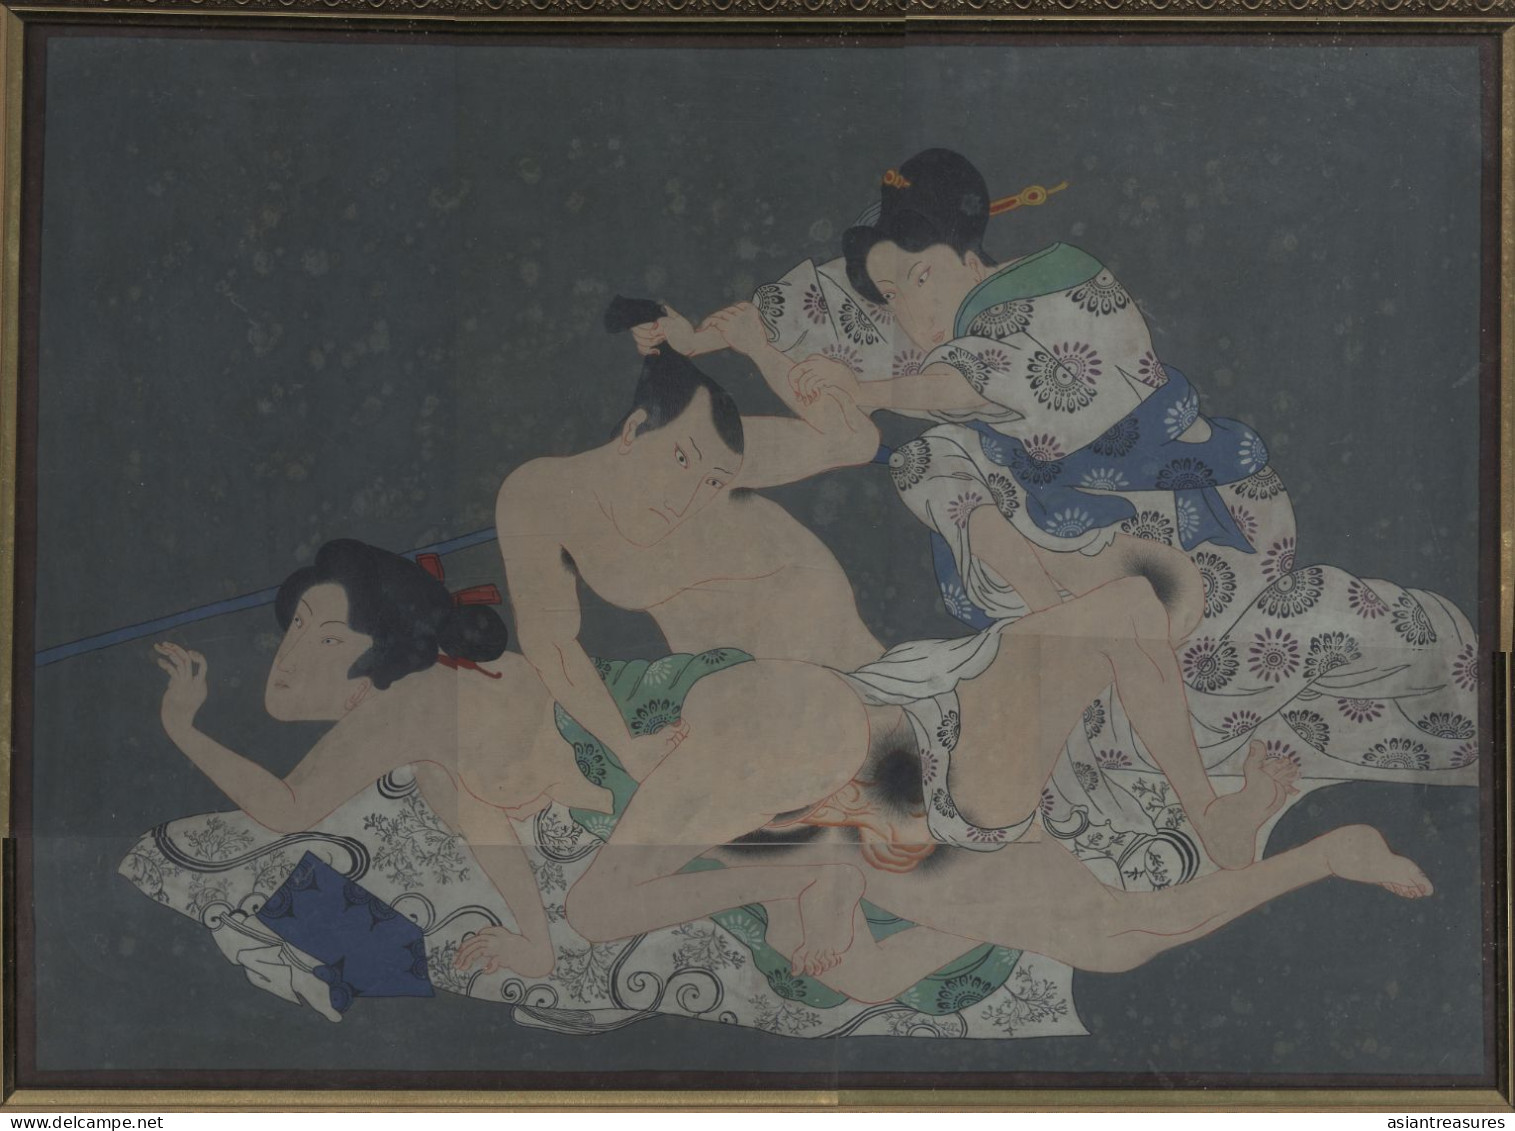 Japanese Shunga Explicit Erotic Art Picture 80 Years+ Old - Aziatische Kunst